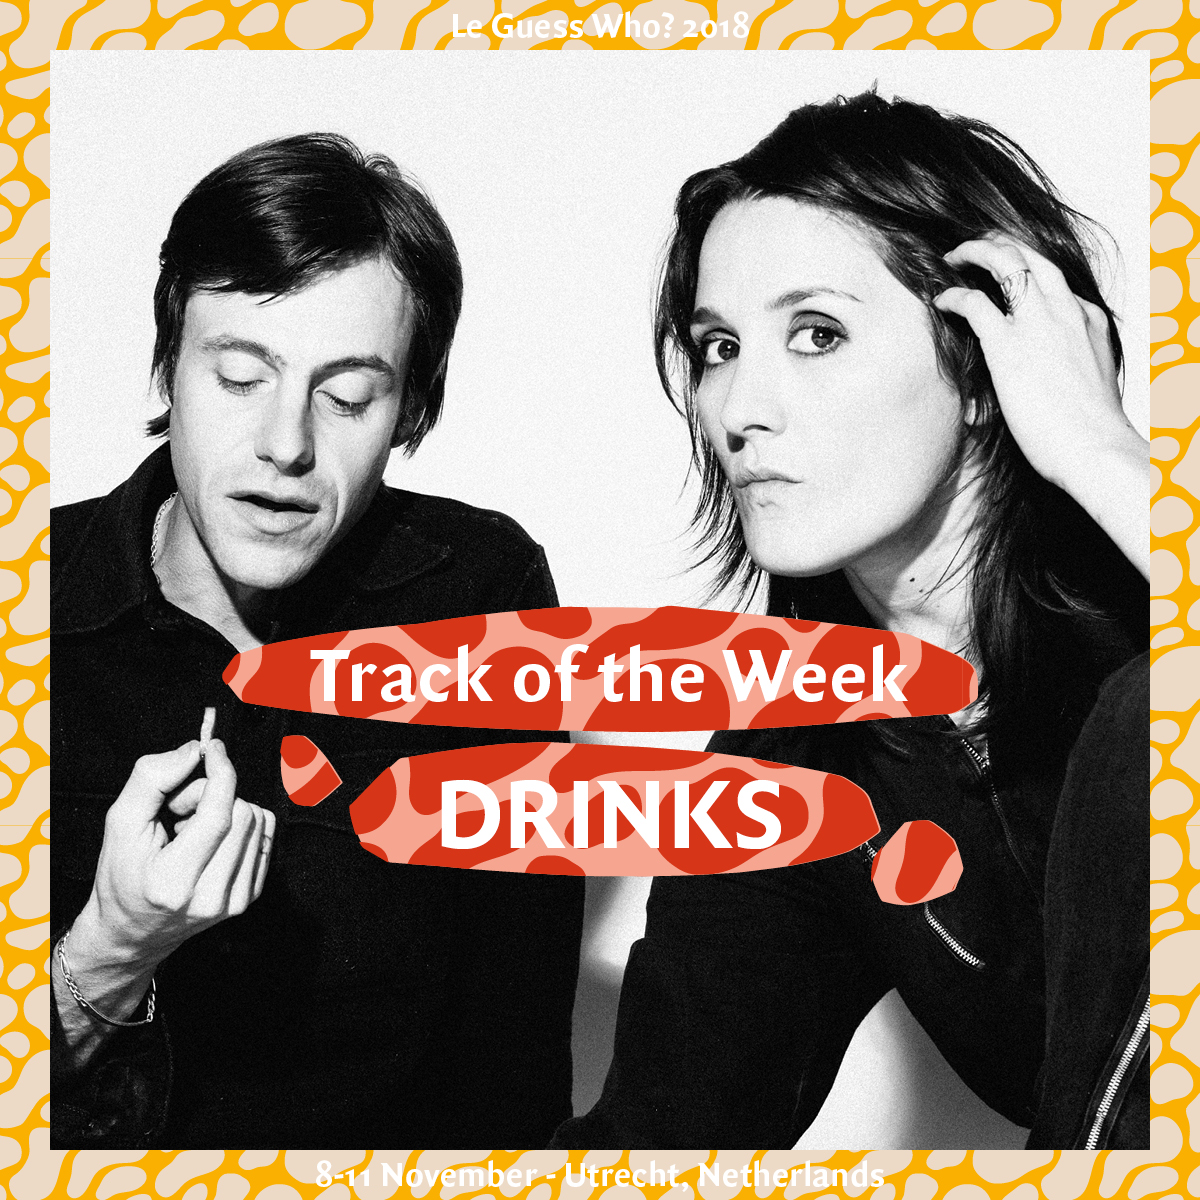 Track of the Week #8: DRINKS - 'Corner Shops'